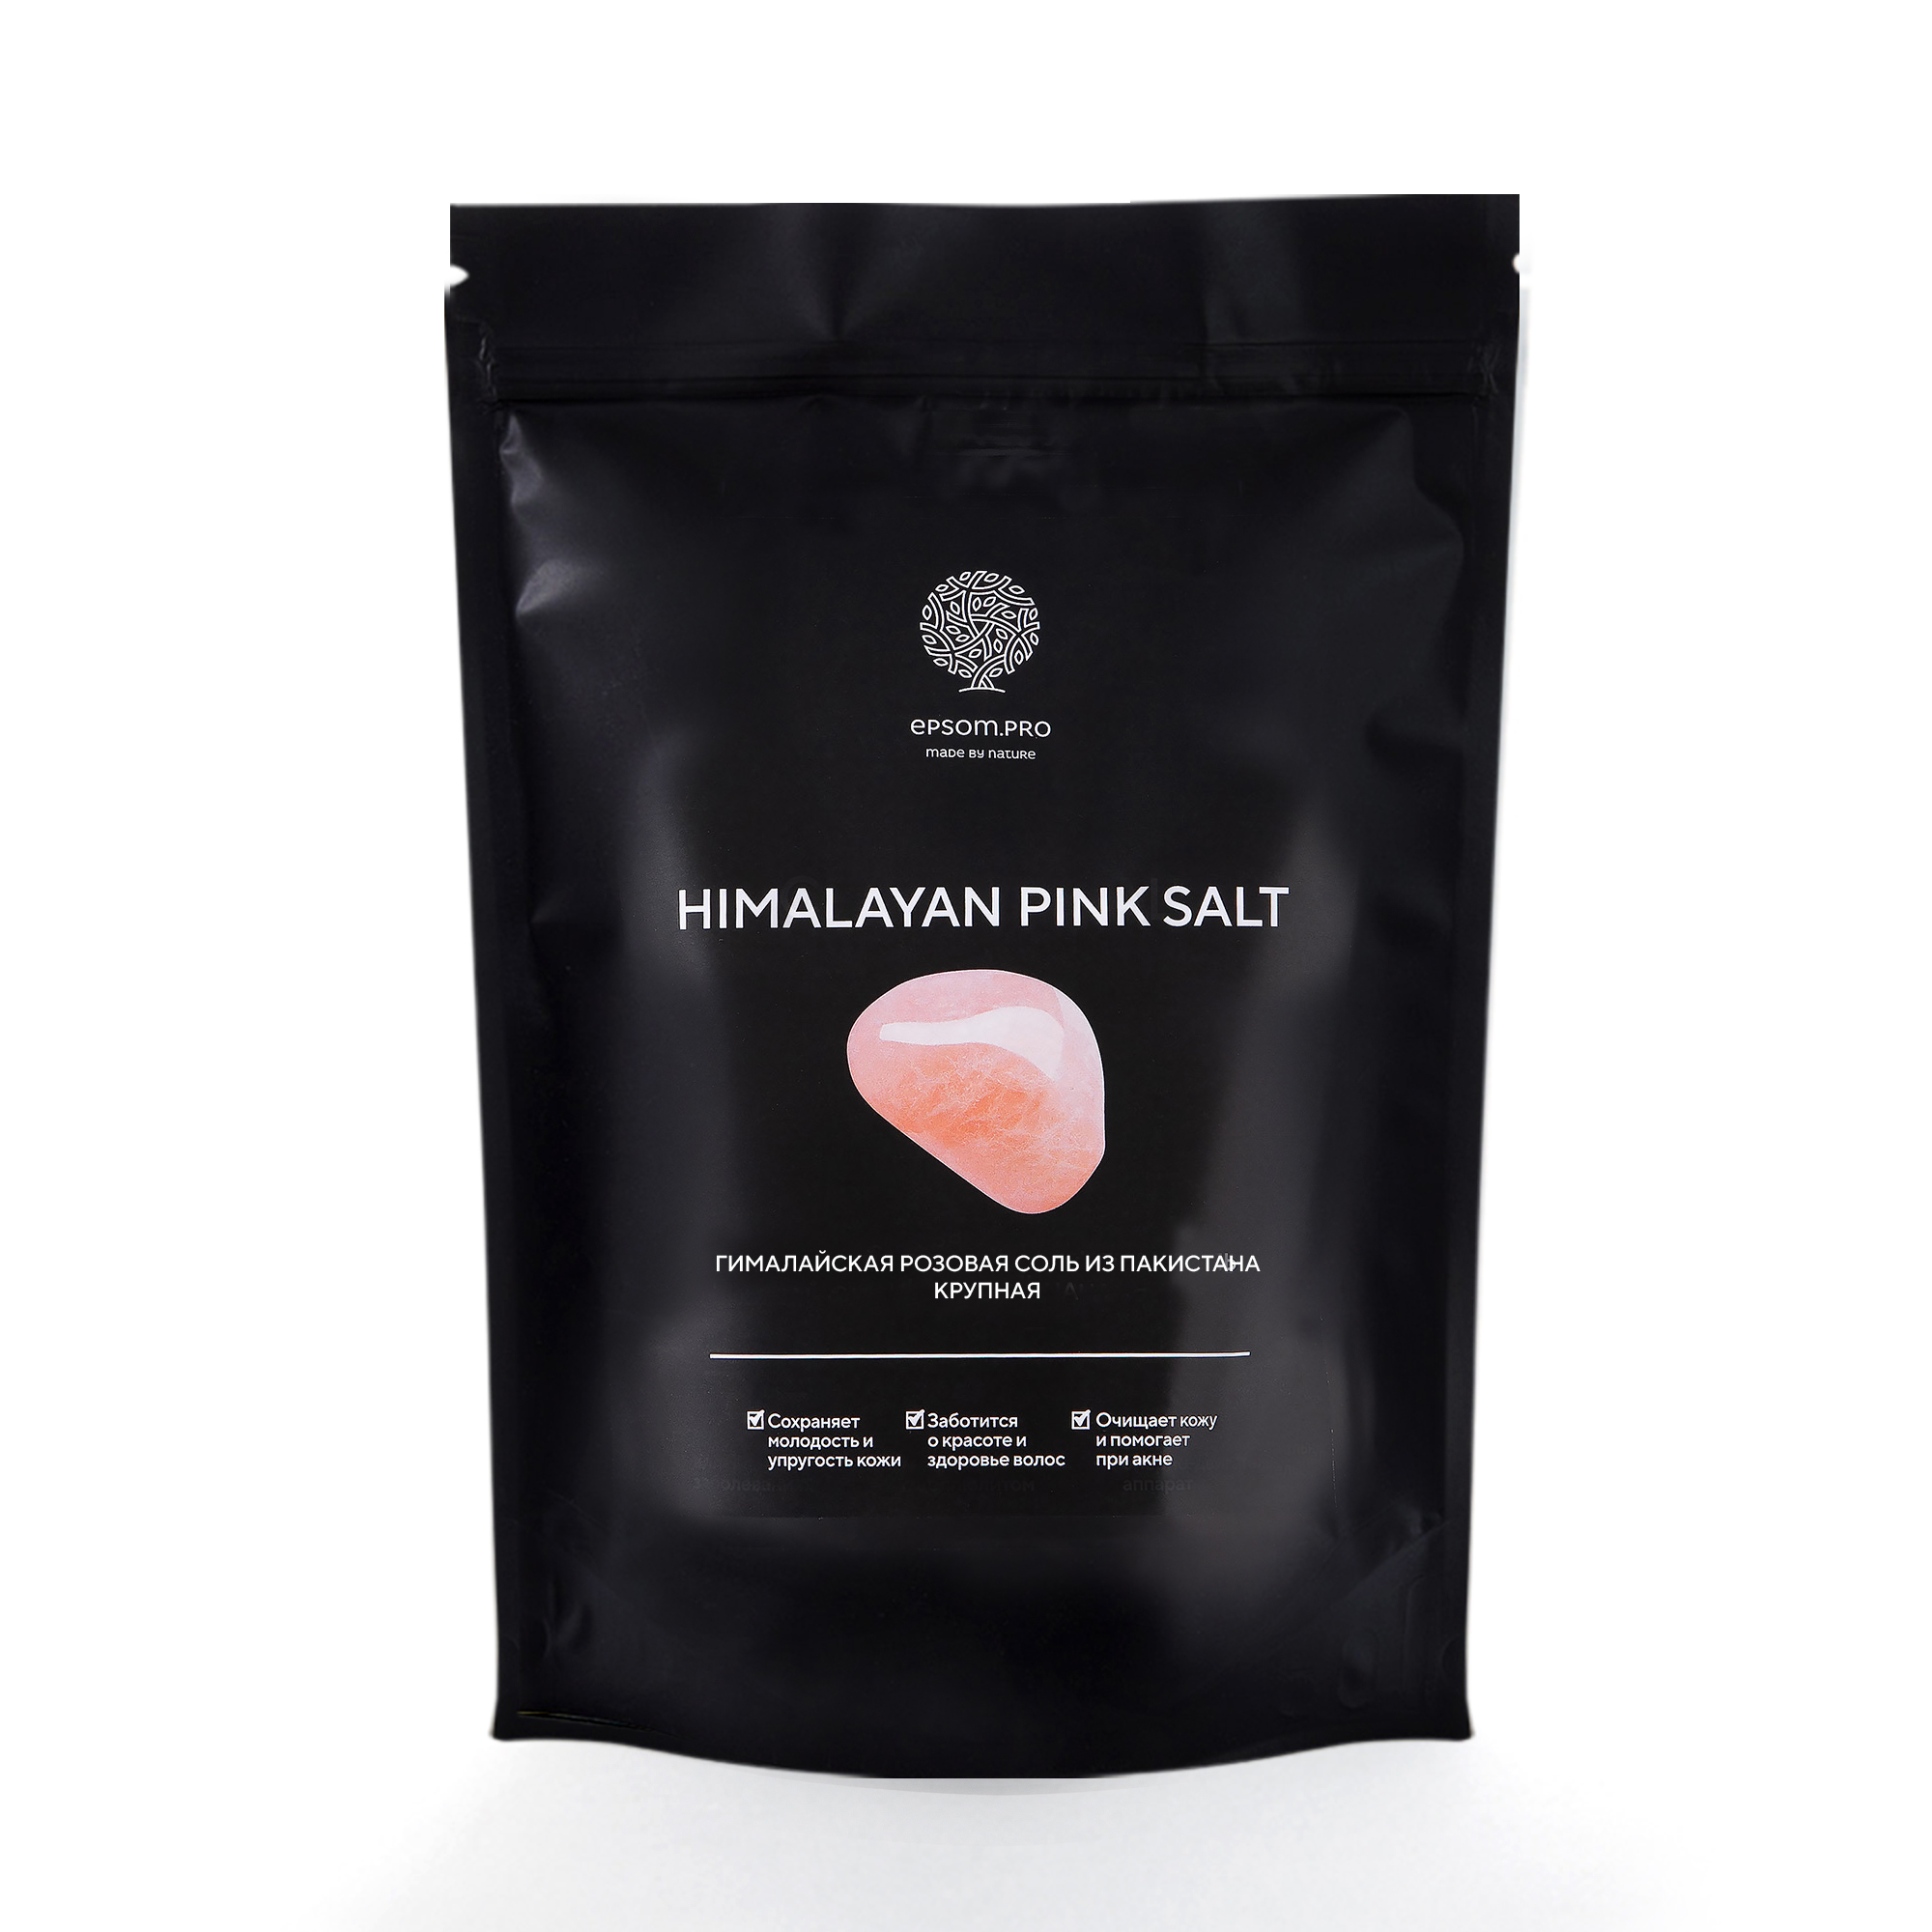 lunar lab himalayan pink salt гималайская розовая соль банка 3 кг Гималайская розовая соль HYMALAYAN PINK SALT крупная 2,5 кг